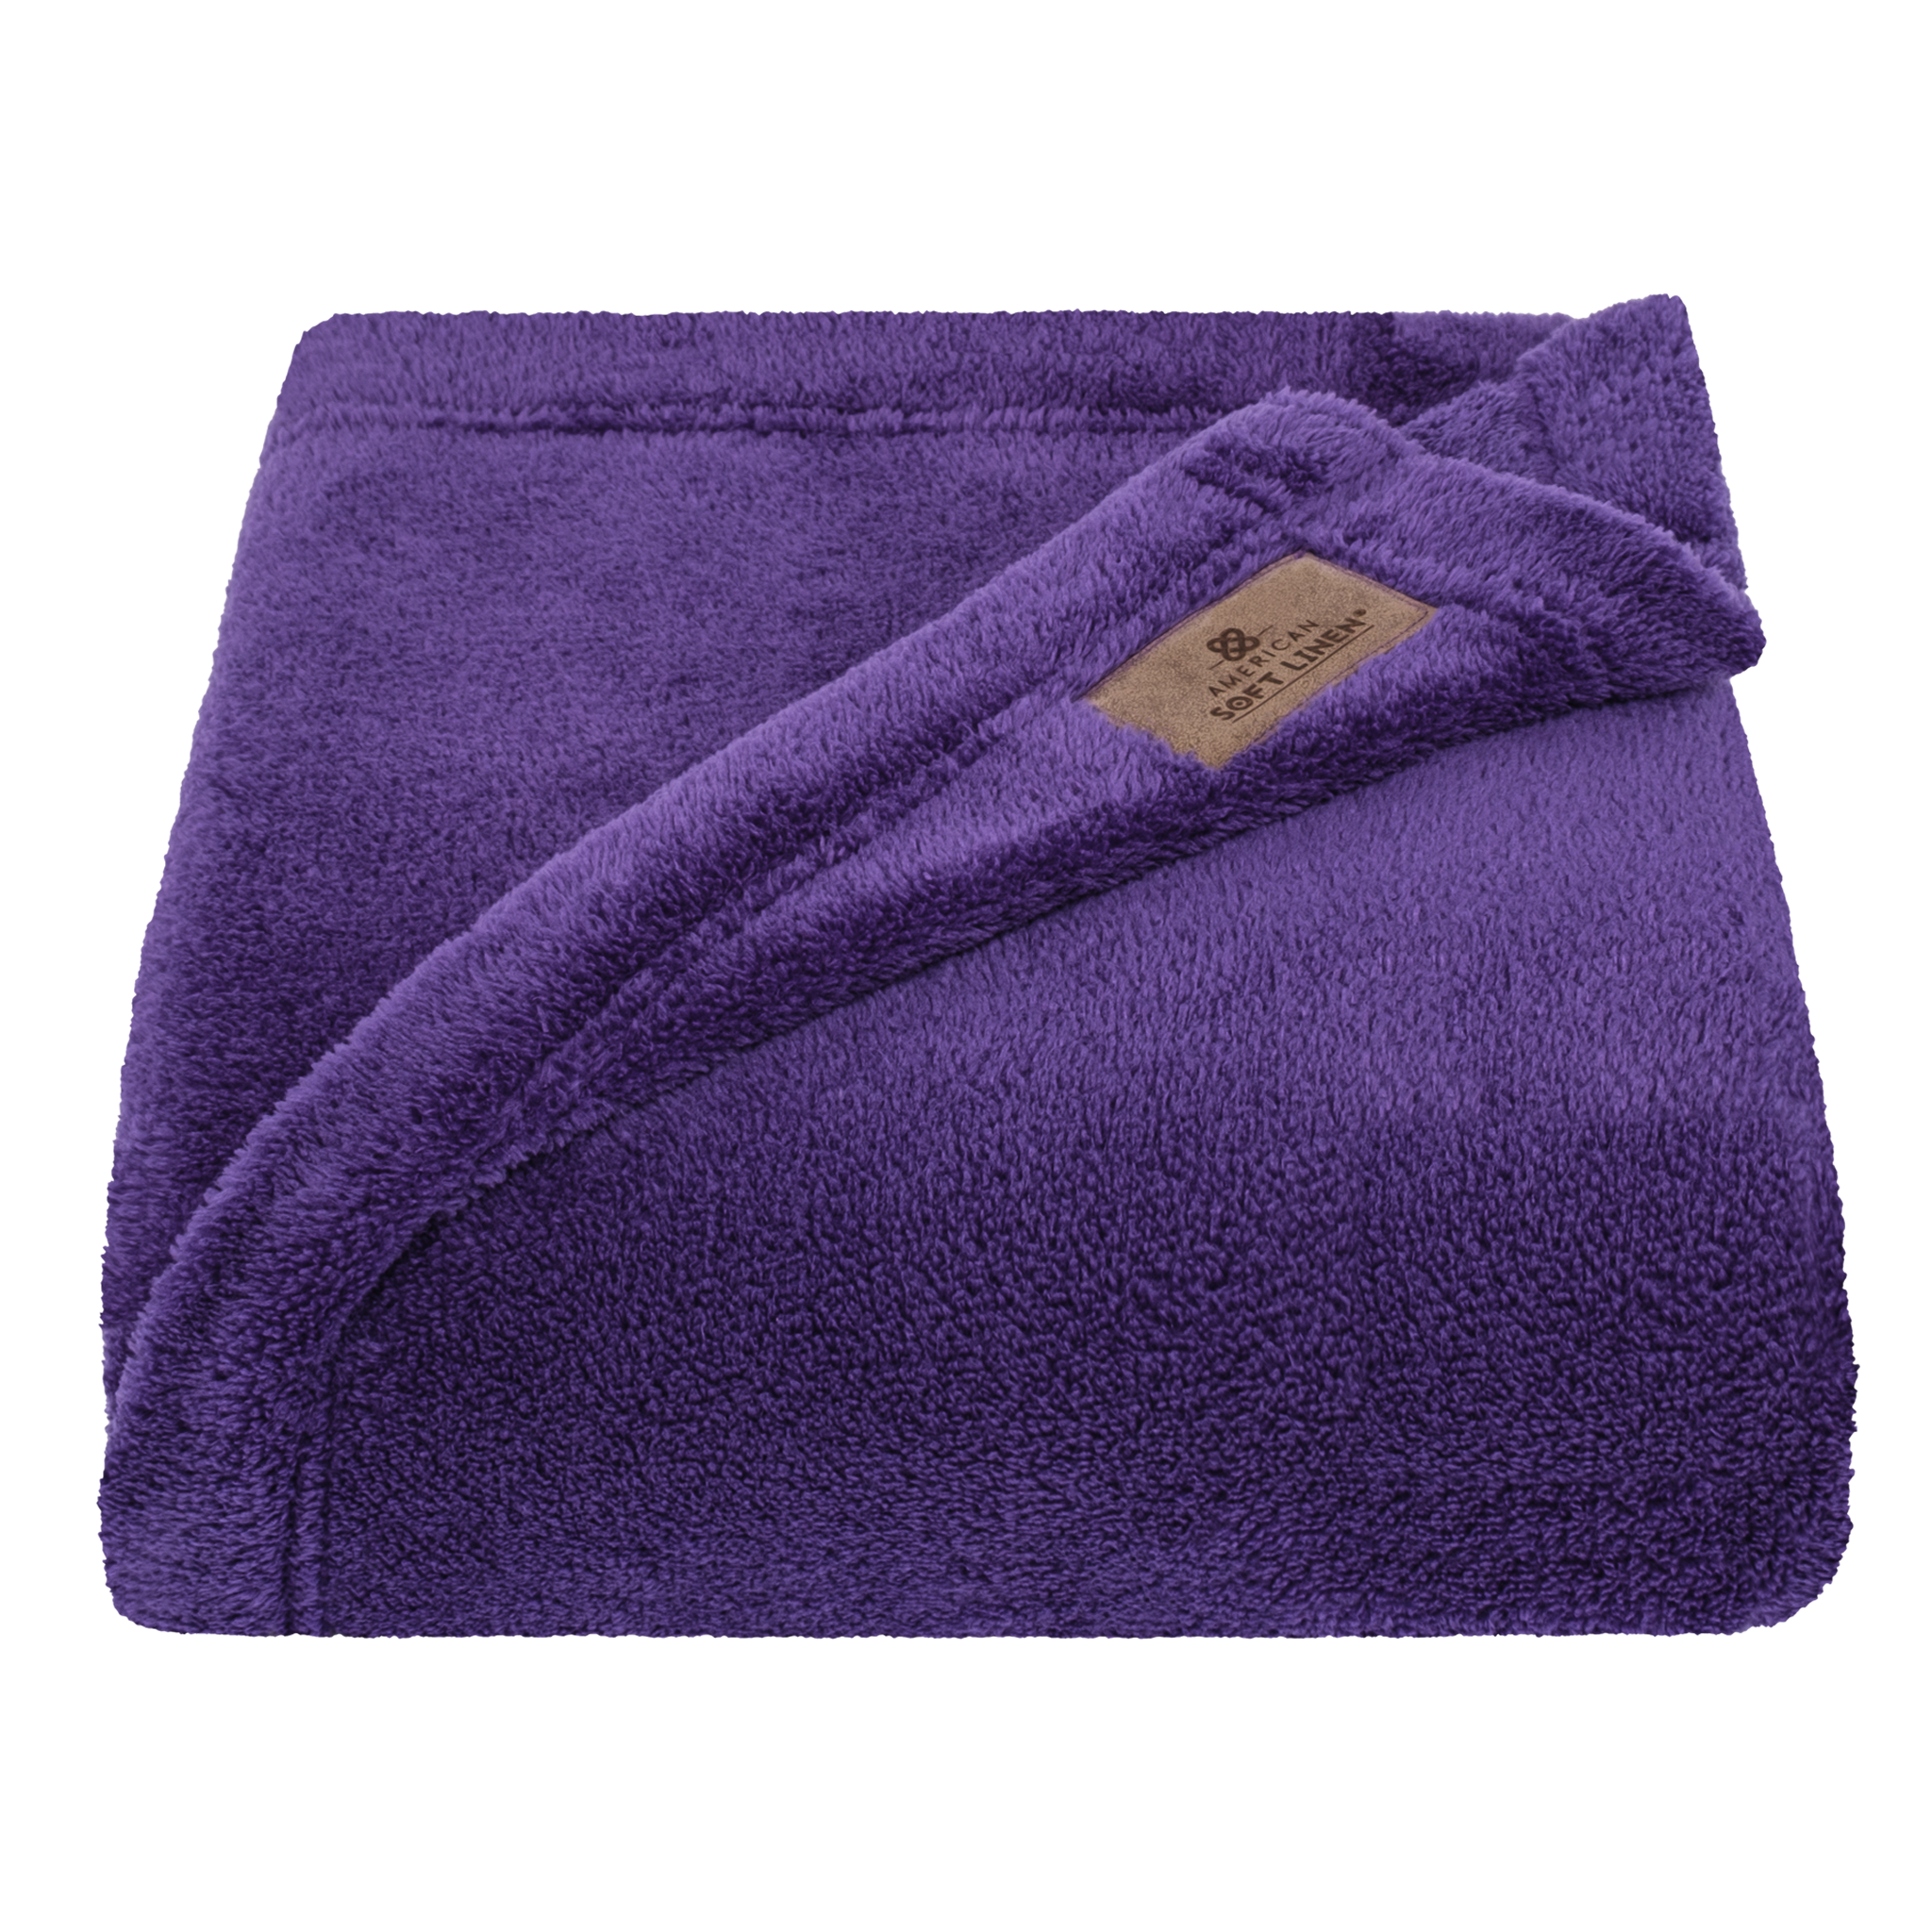 American Soft Linen - Bedding Fleece Blanket - Wholesale - 24 Set Case Pack - Throw Size 50x60 inches - Purple - 3